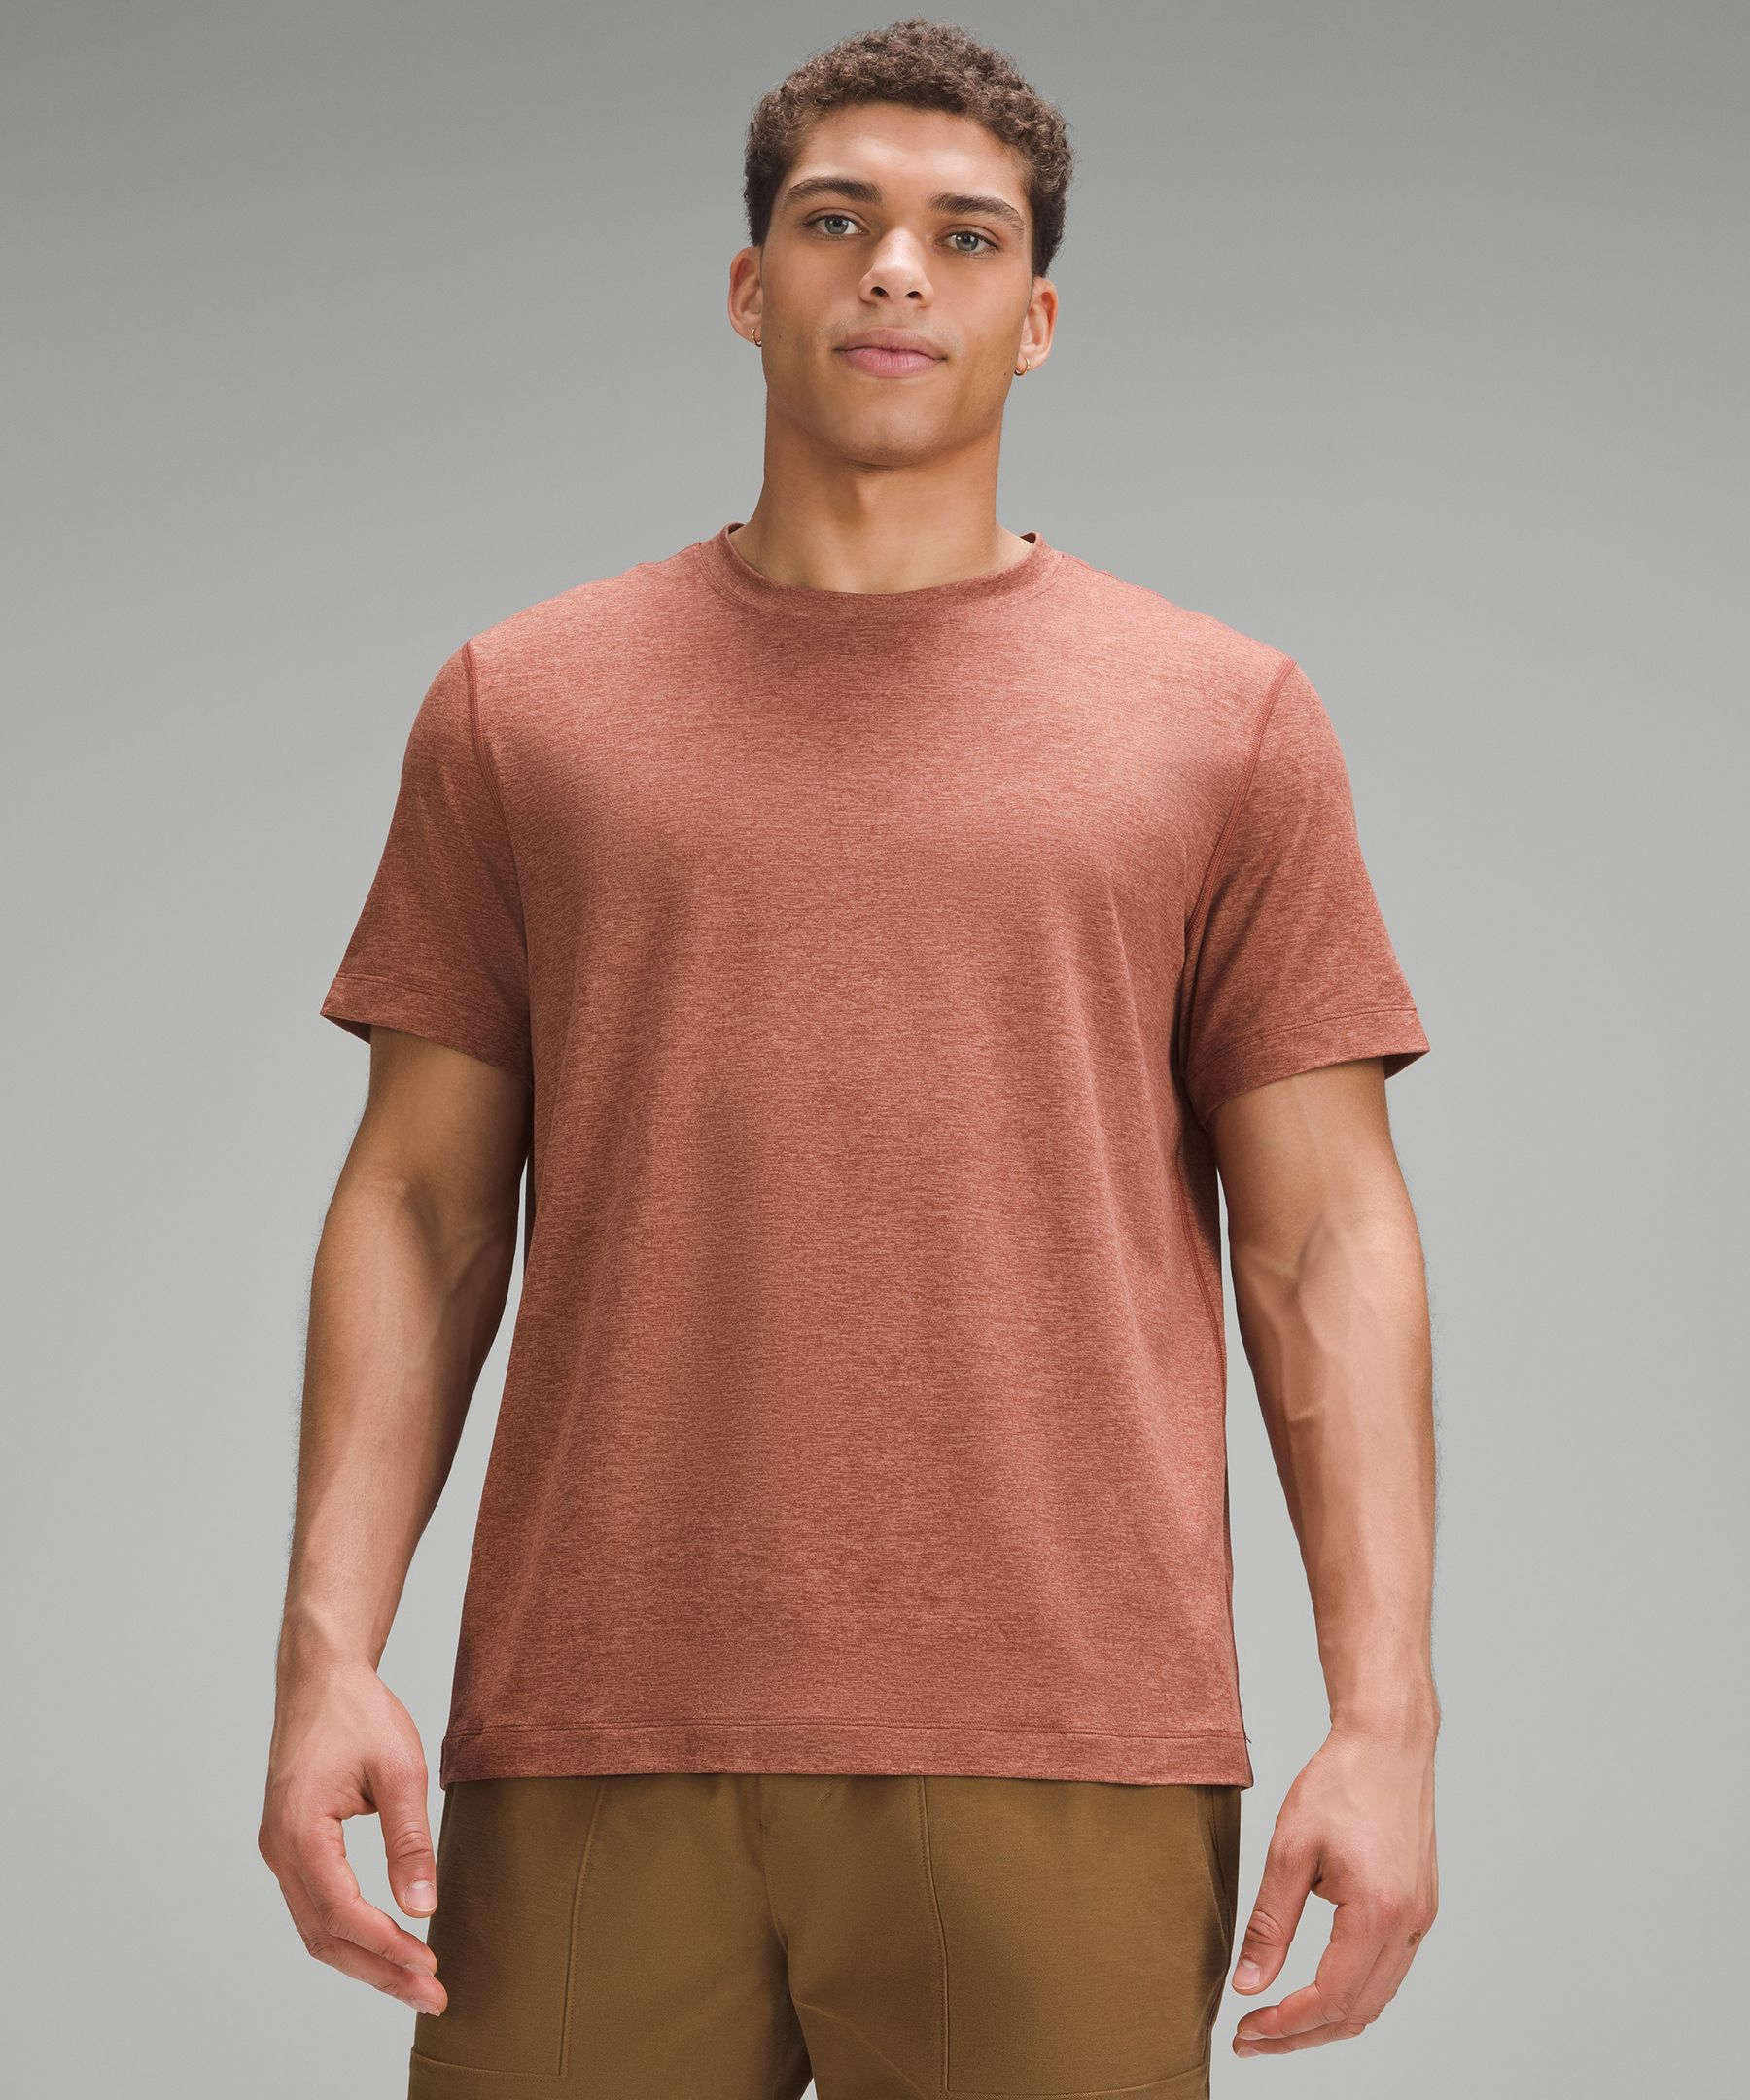 Lululemon Soft Jersey Short-sleeve Shirt